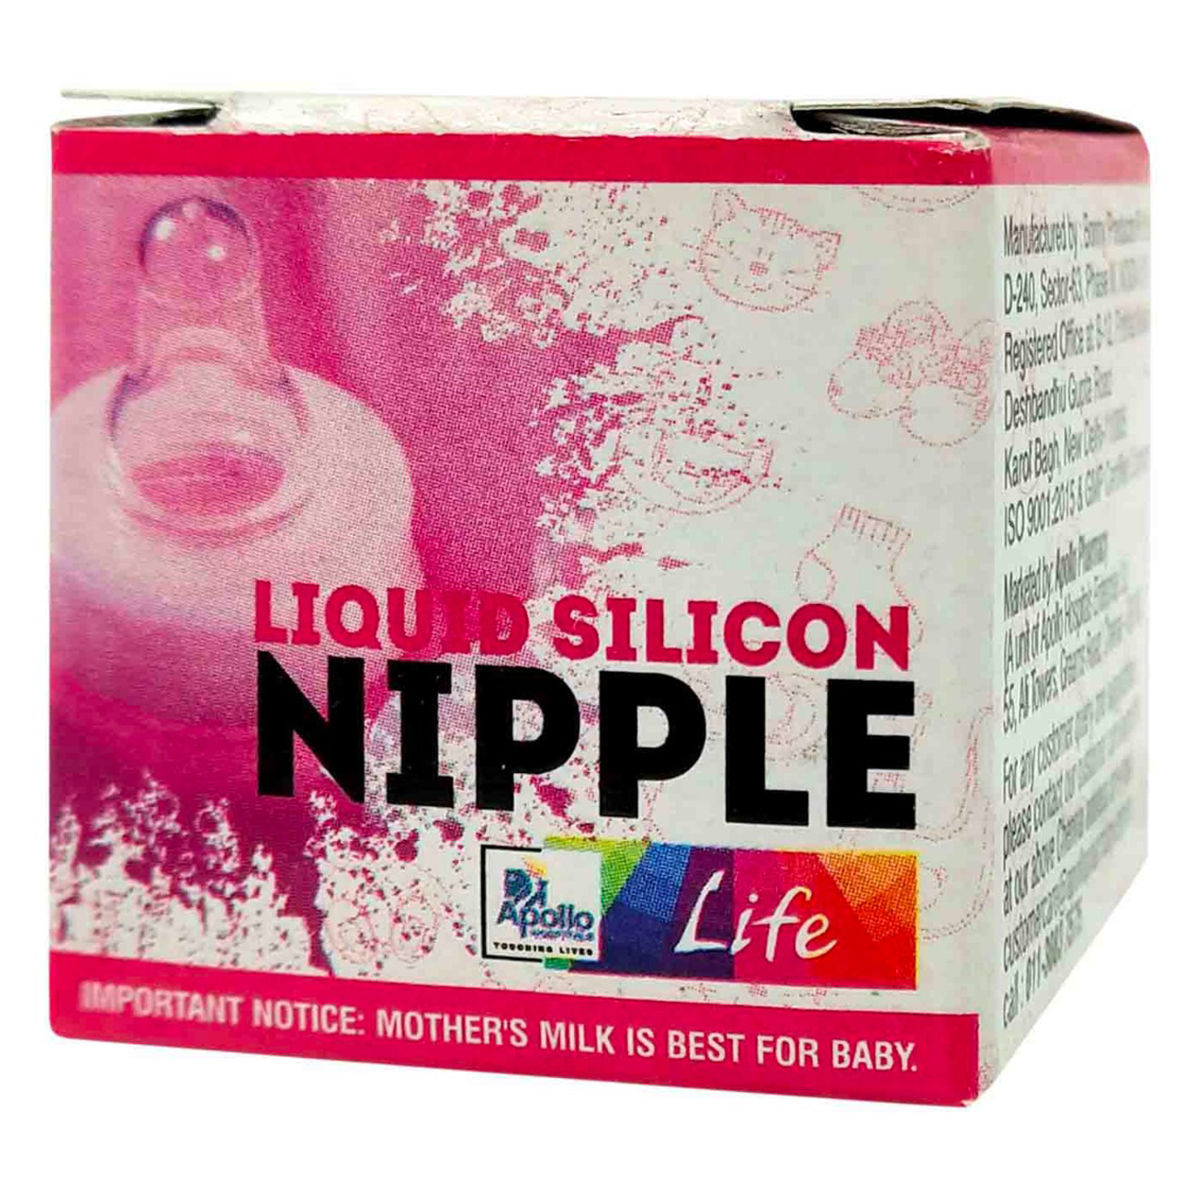 Buy Apollo Life Liquid Silicone Nipple, 1 Count Online